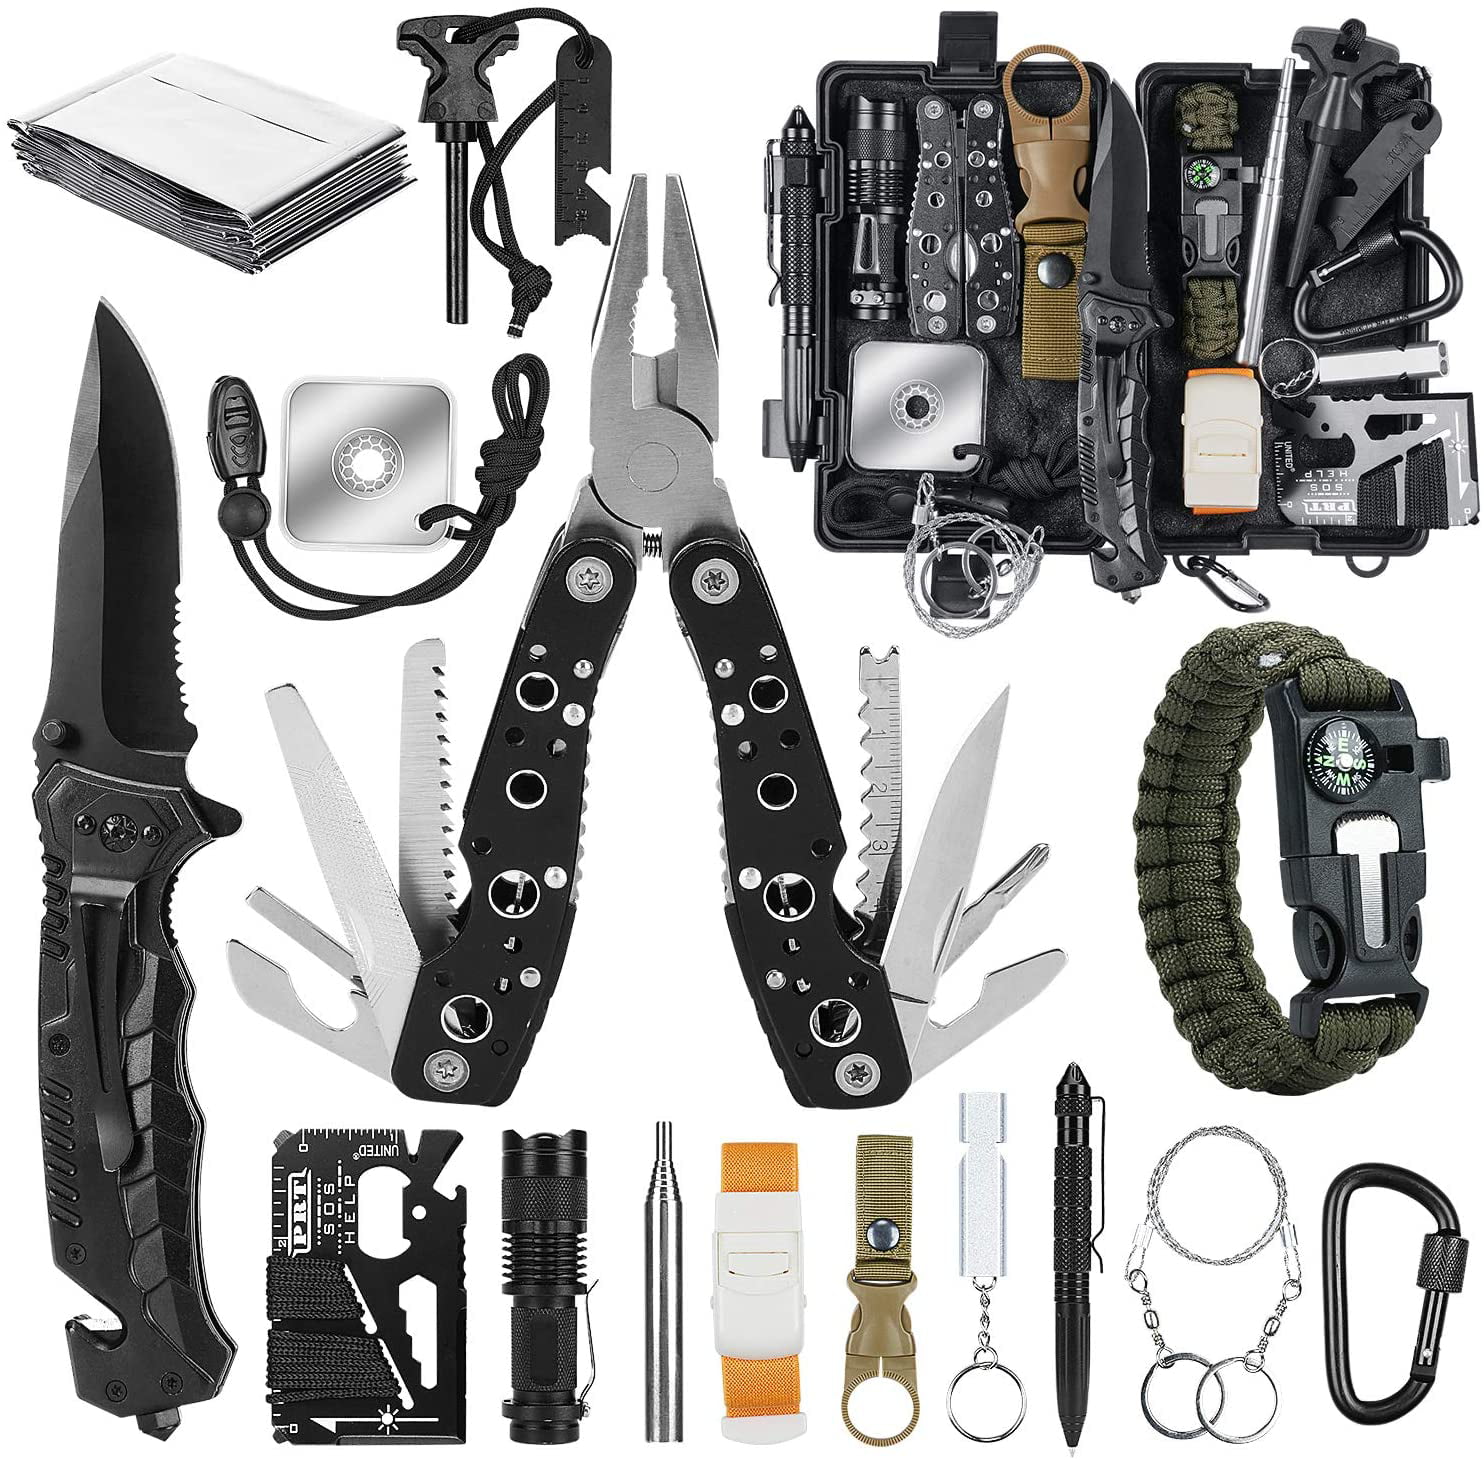 Emergency Survival Gear kit,Bracelet,Emergency Blanket,SOS,etc Emergency Survival Kit /& Survival Gear with Tactical Lifesaving Emergency Tools